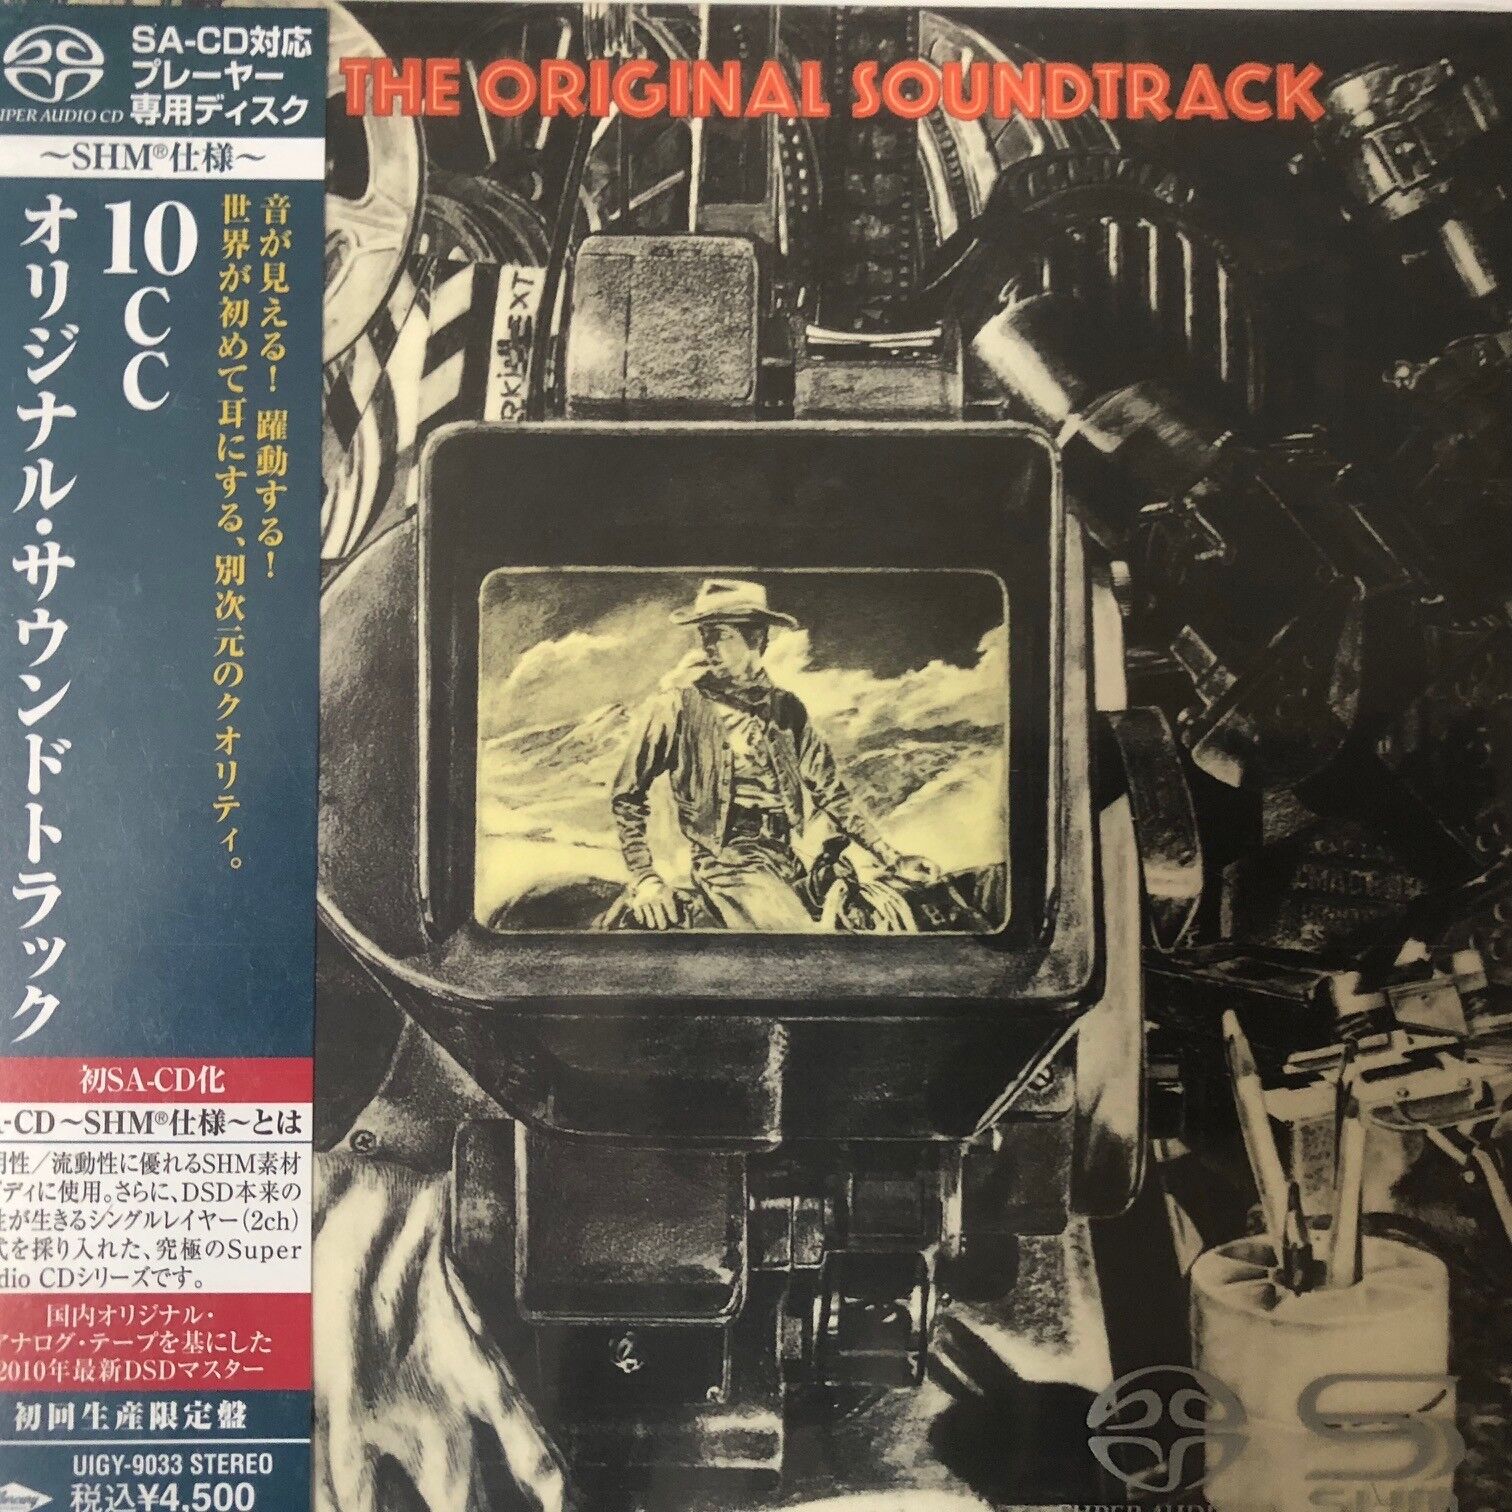 Image 1 - The Original Soundtrack by 10cc (SACD-SHM. jp mini LP),2010, UIGY-9033 Japan 